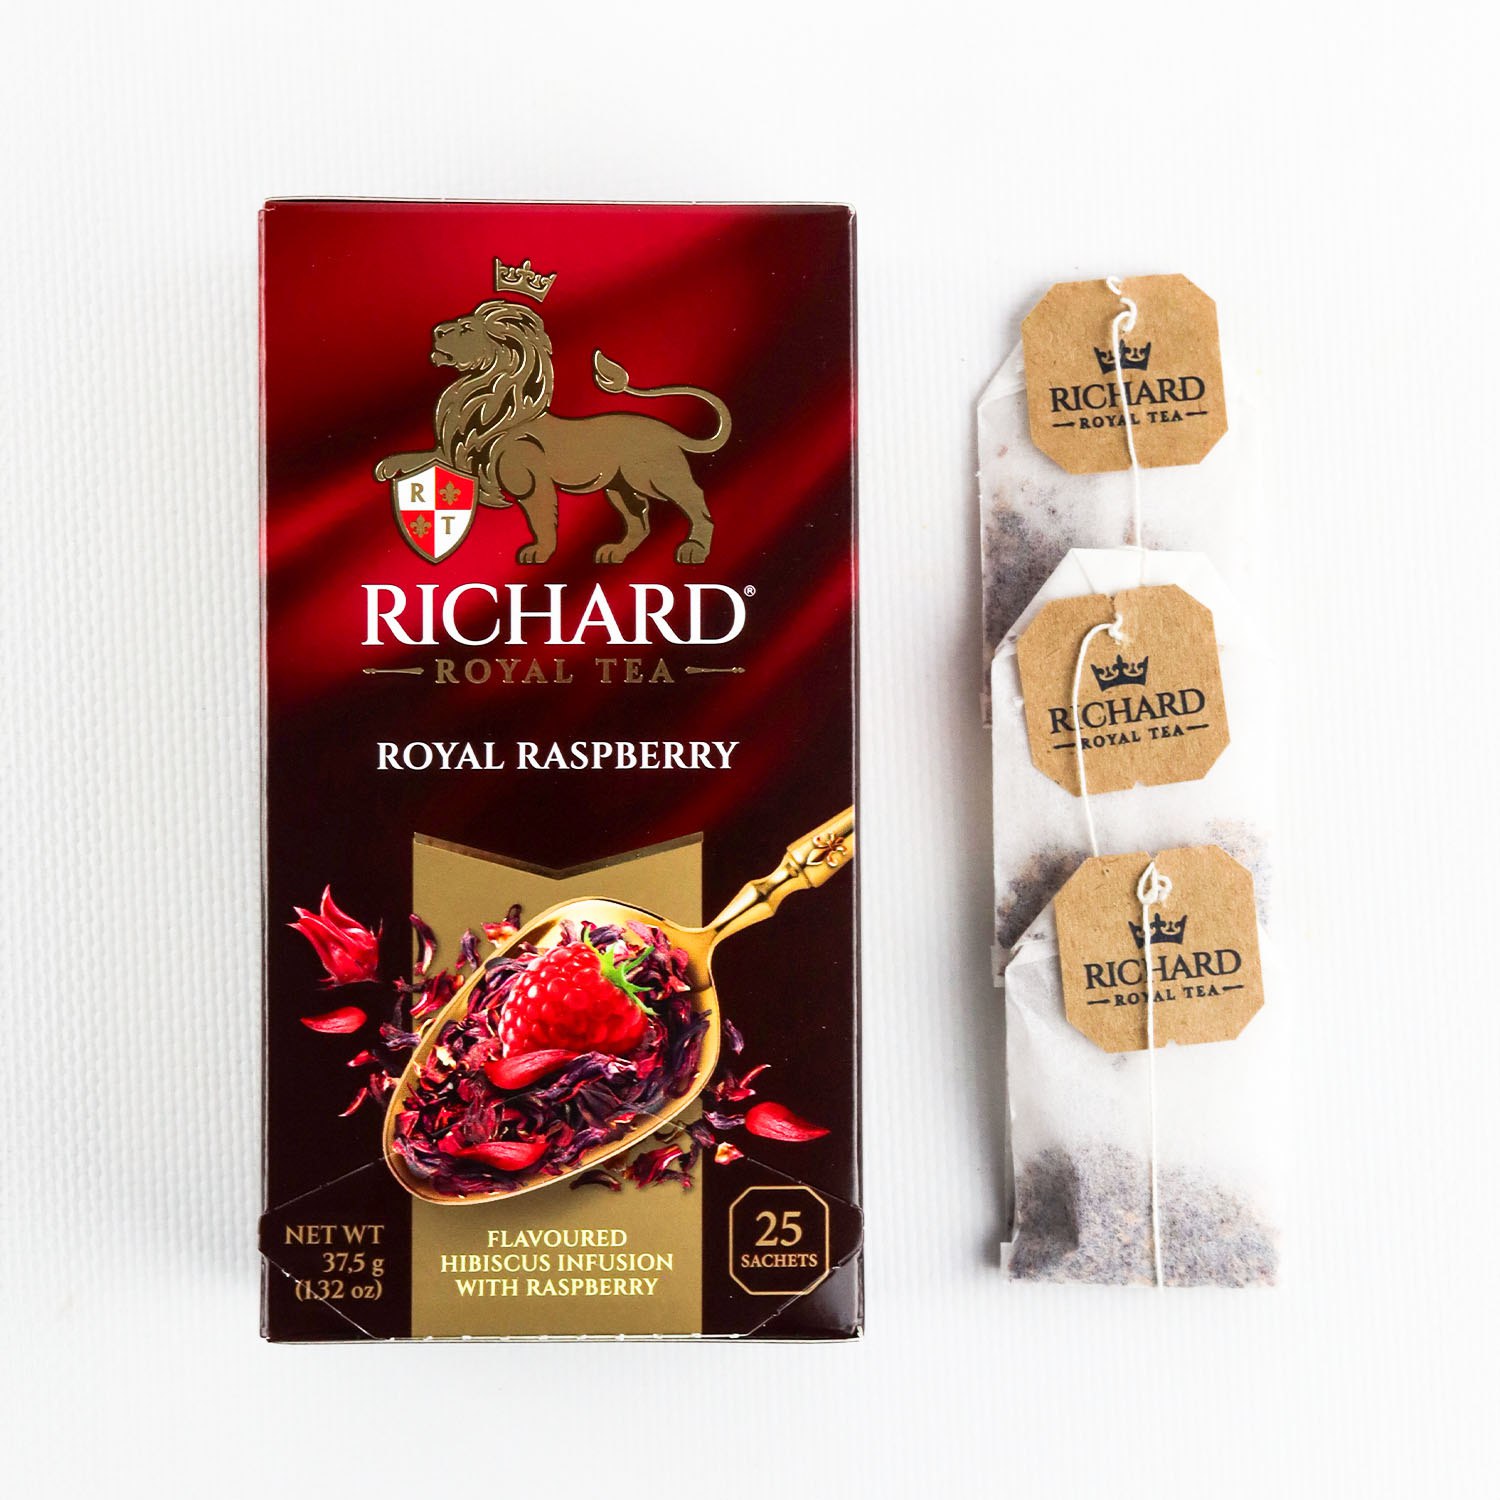 Richard Royal Raspberry fruit and herbal flavored tea